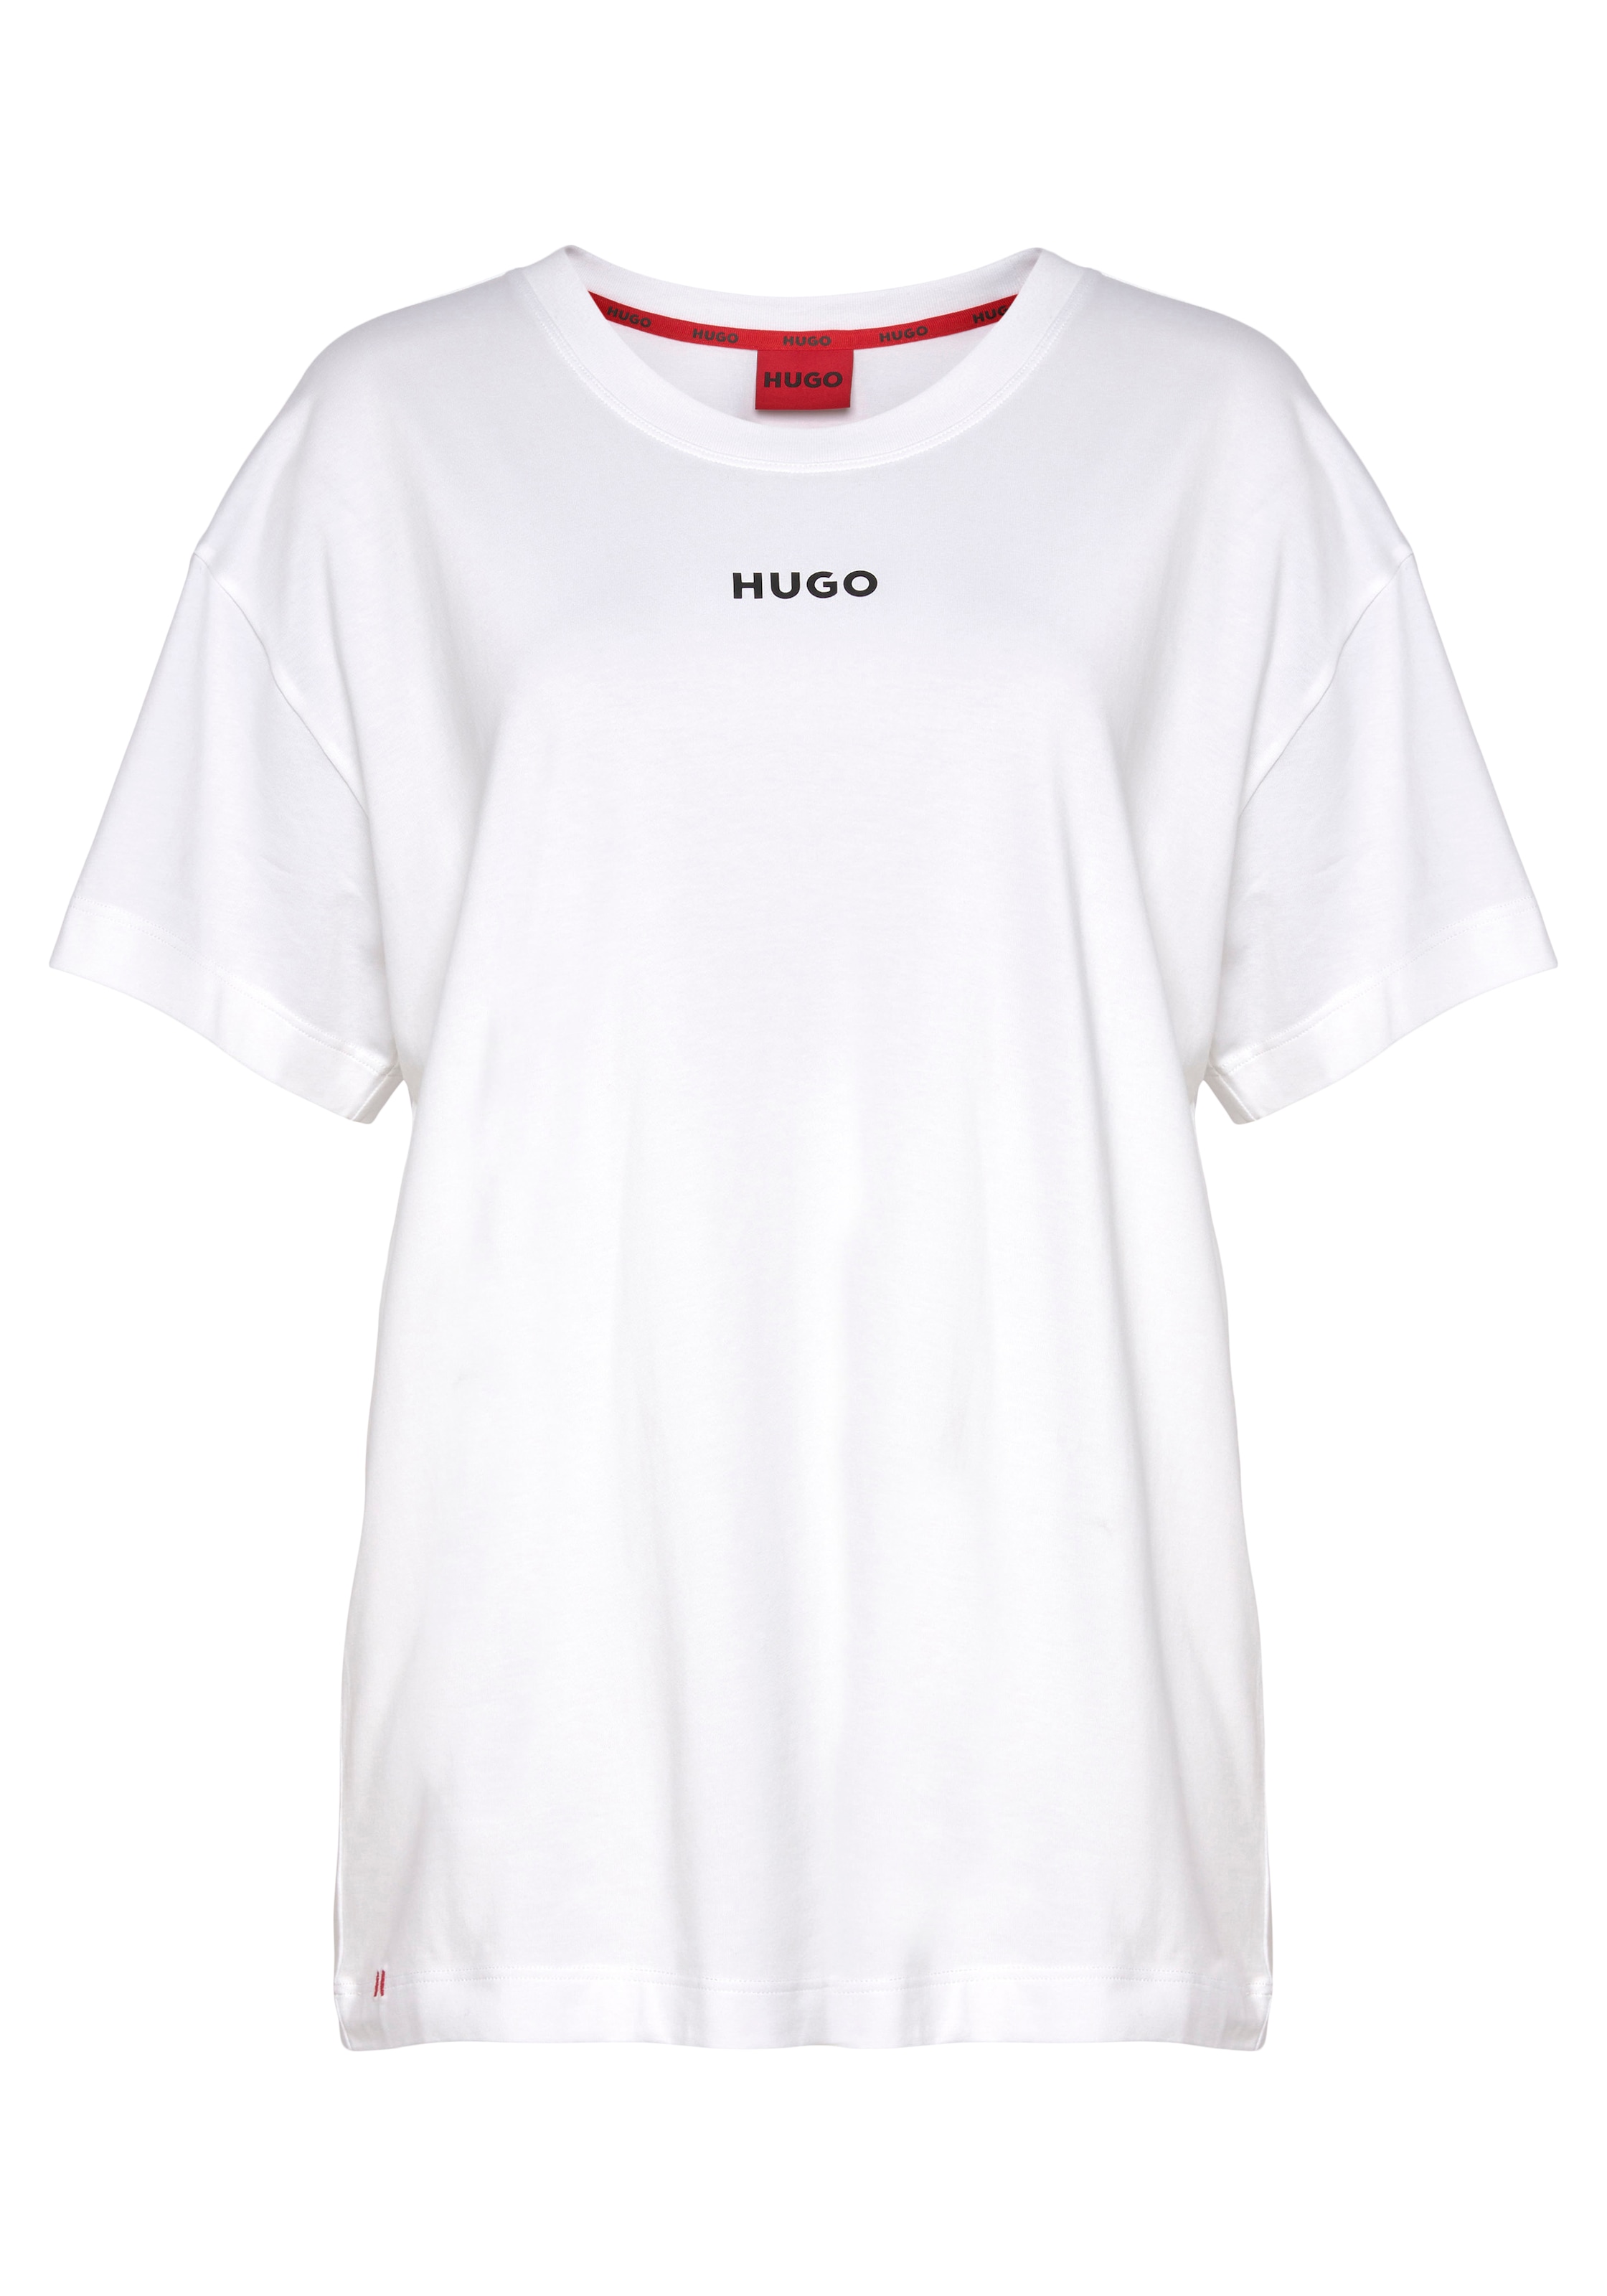 HUGO Logoschriftzug für »Linked T-Shirt kaufen | HUGO mit BAUR T-Shirt«,